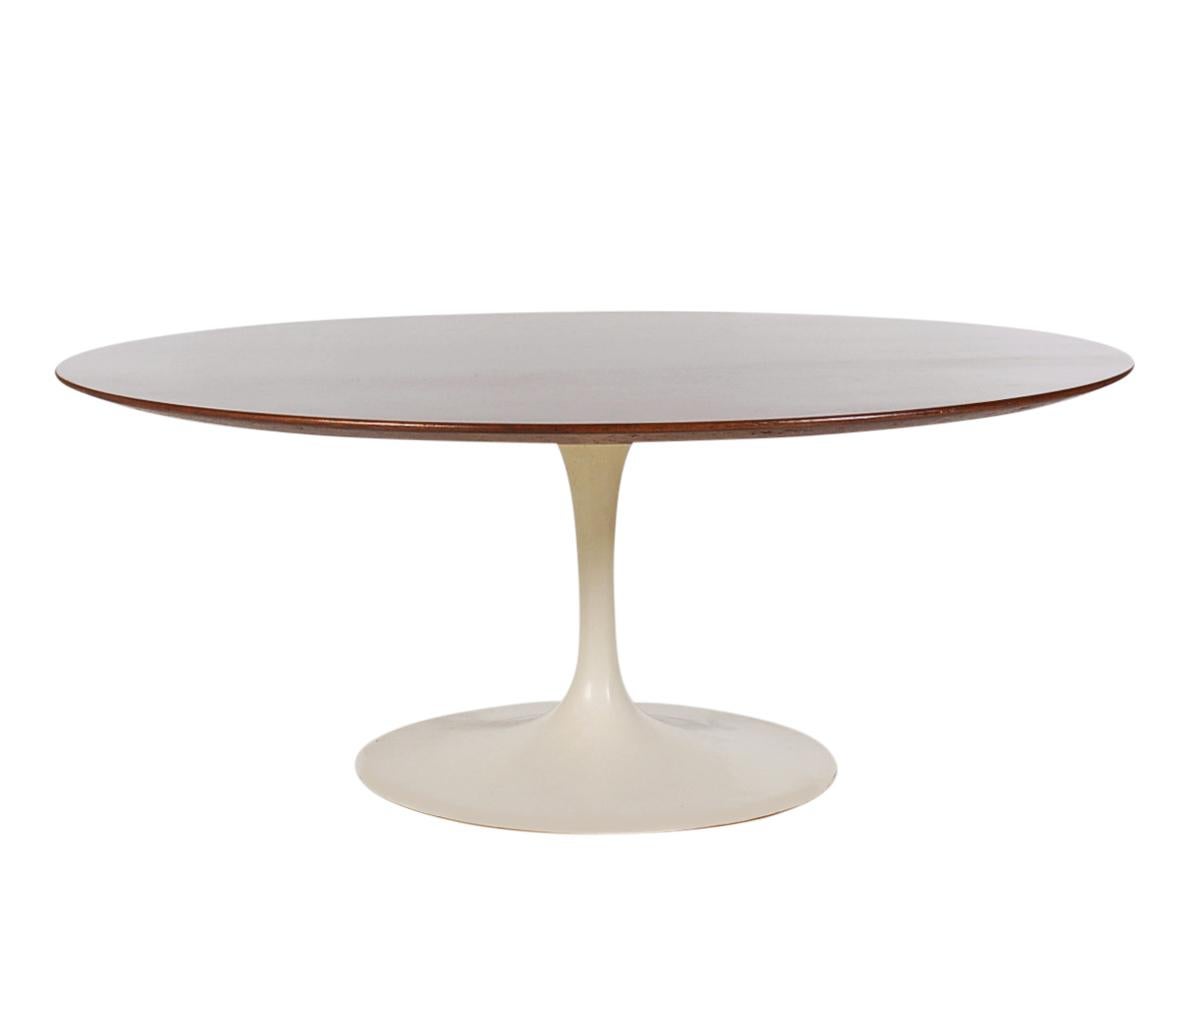 Late 20th Century Mid-Century Modern Eero Saarinen for Knoll Tulip Coffee Table with Walnut Top For Sale